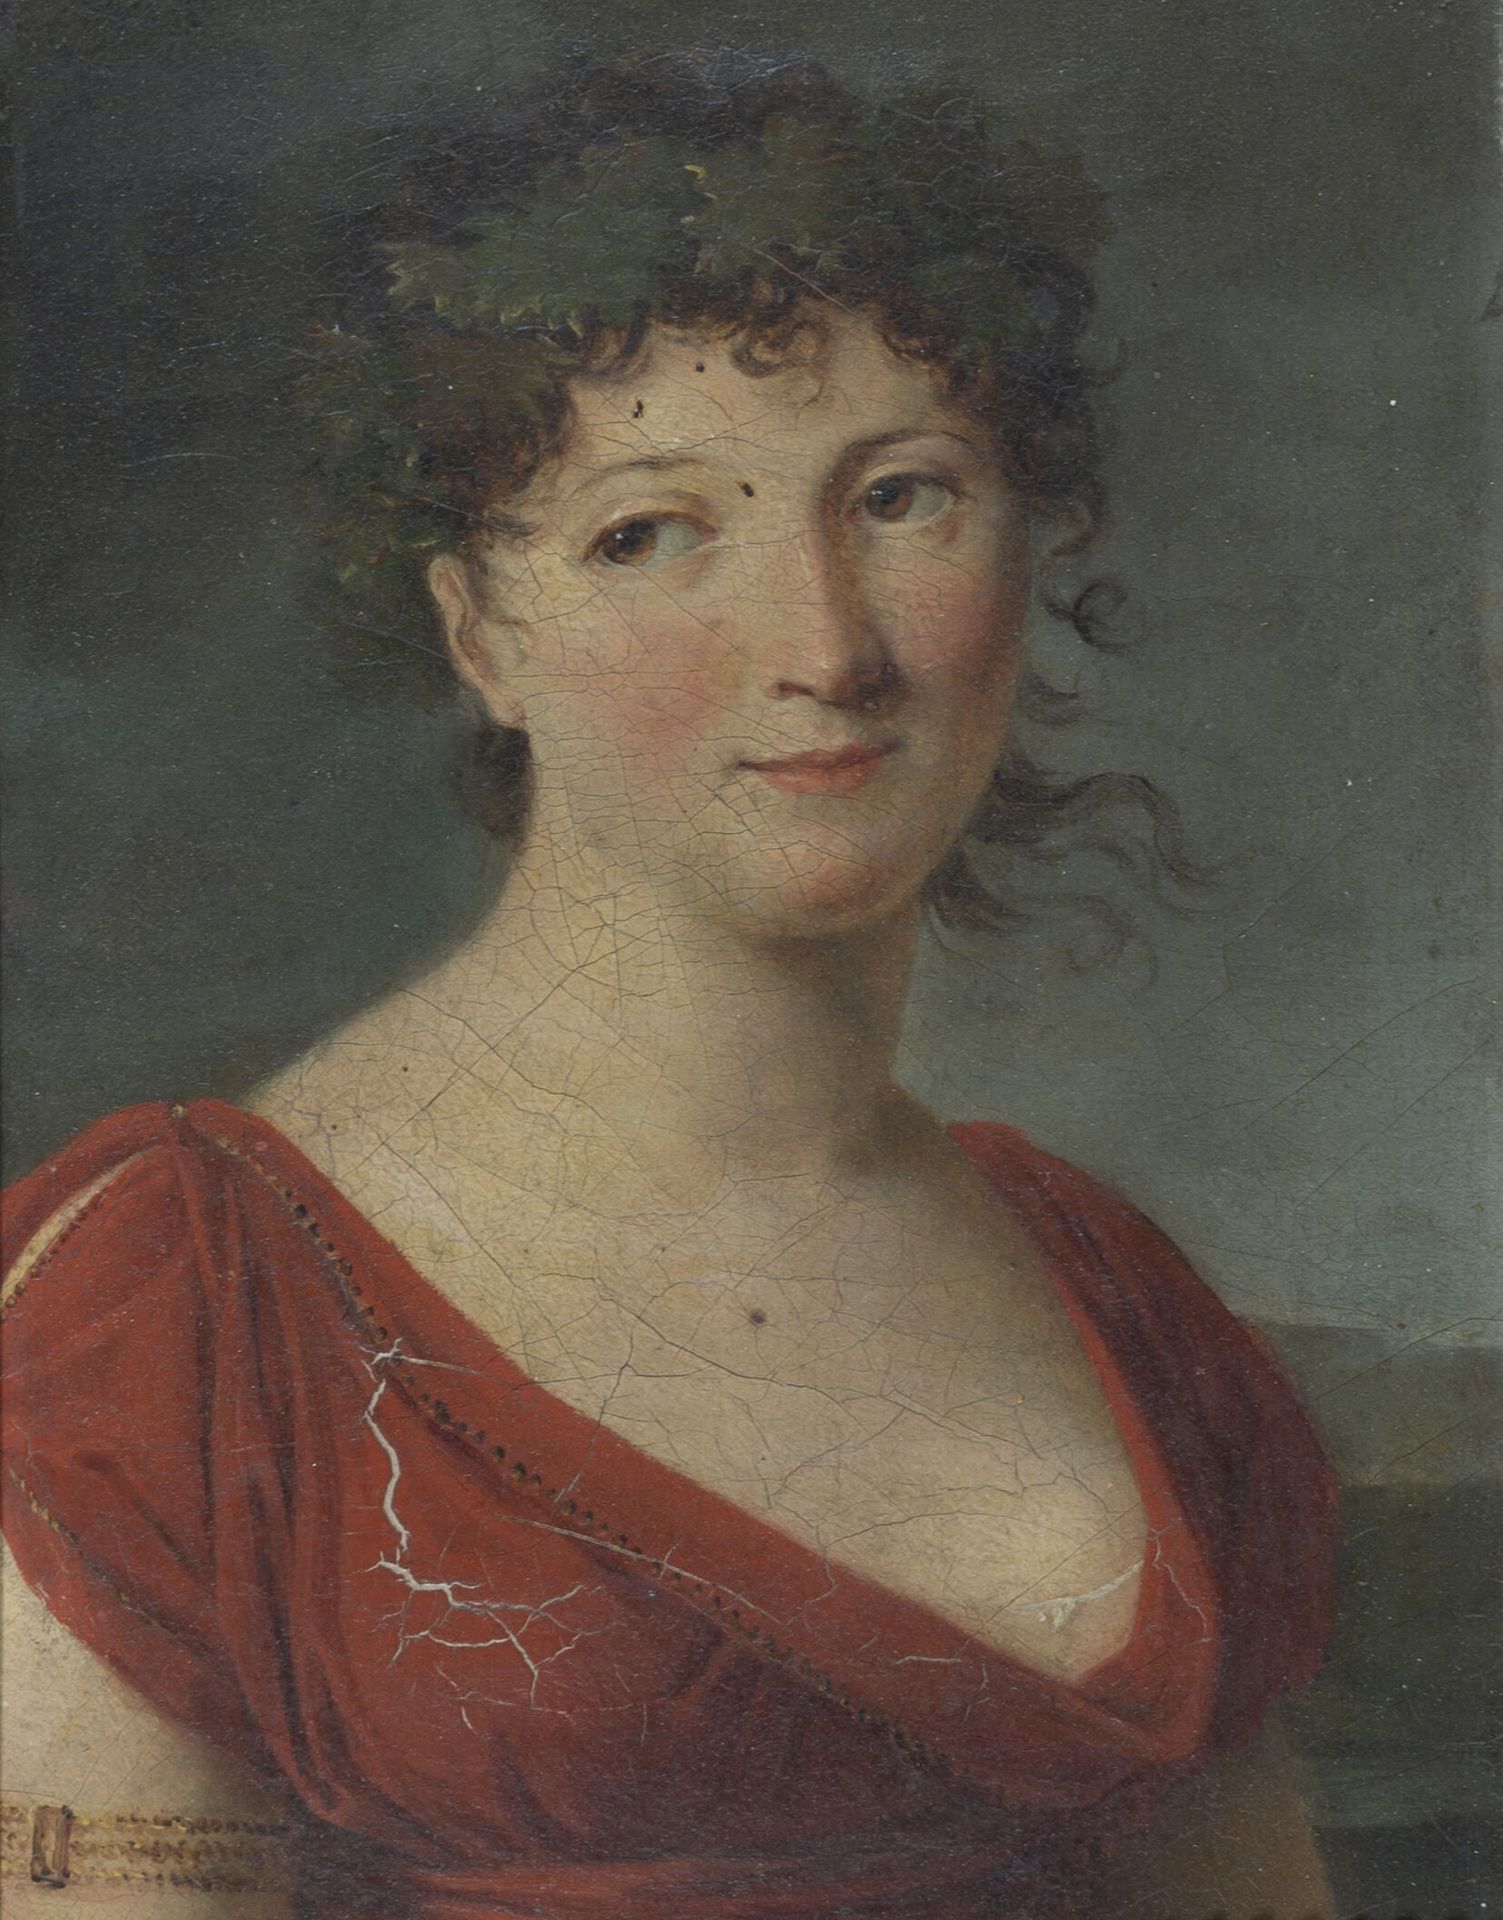 Null 19世纪初的法国学校
穿着红色连衣裙、戴着藤叶皇冠的年轻女子的画像
布面油画
H.22 cm - W. 16 cm HVS
帆布背面标有供应商BELO&hellip;